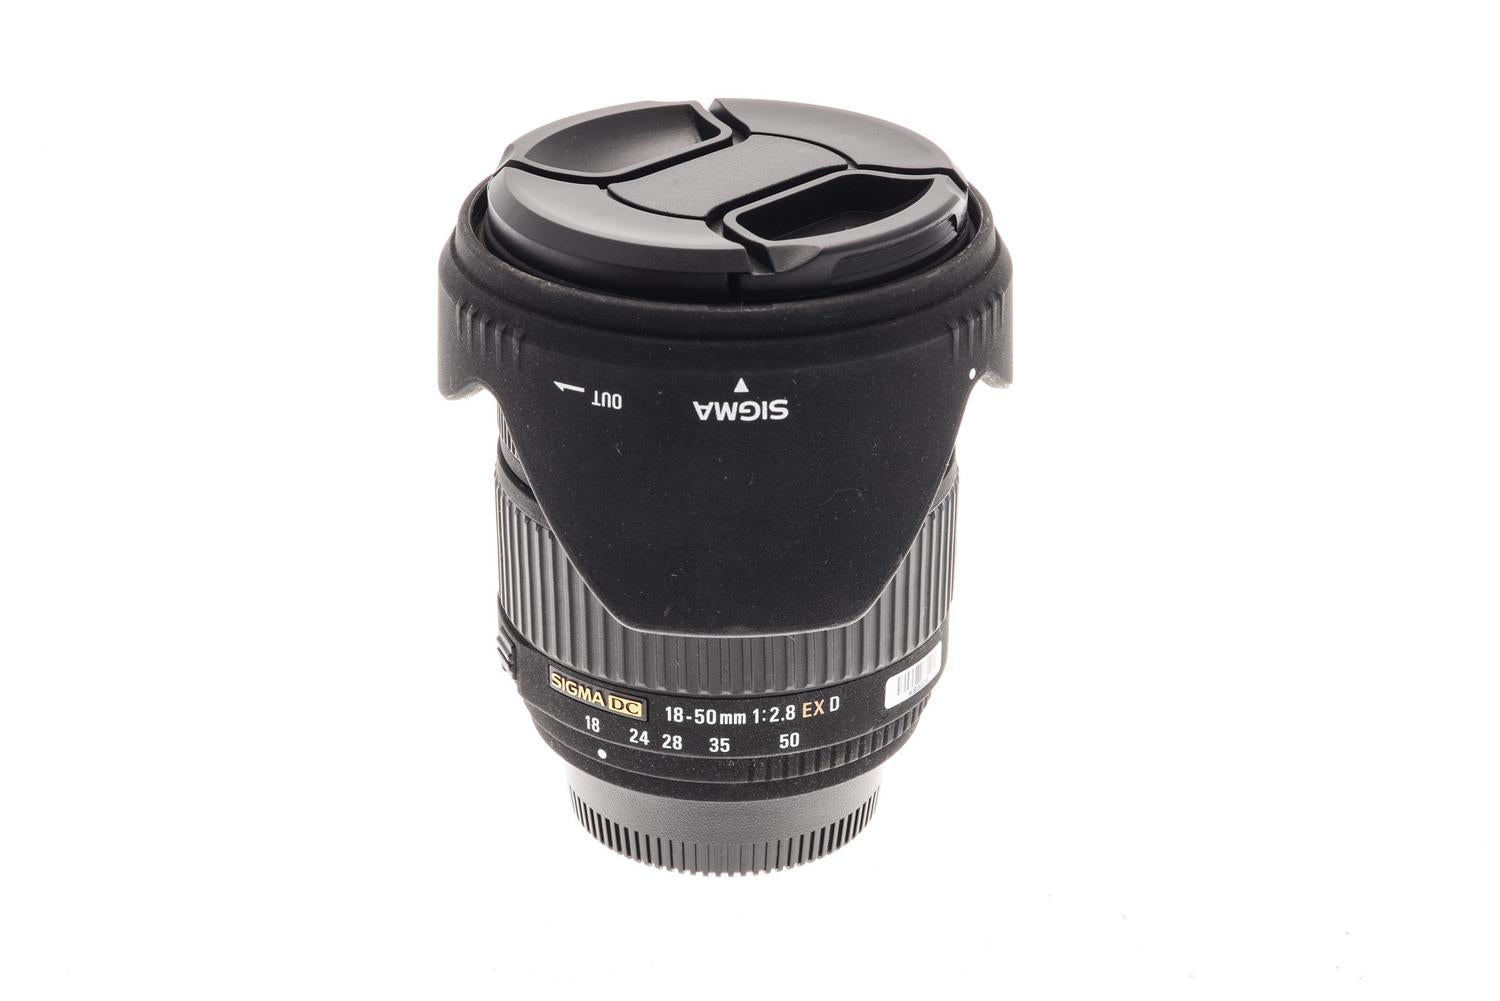 Sigma 18-50mm f2.8 DC EX (D) - Lens